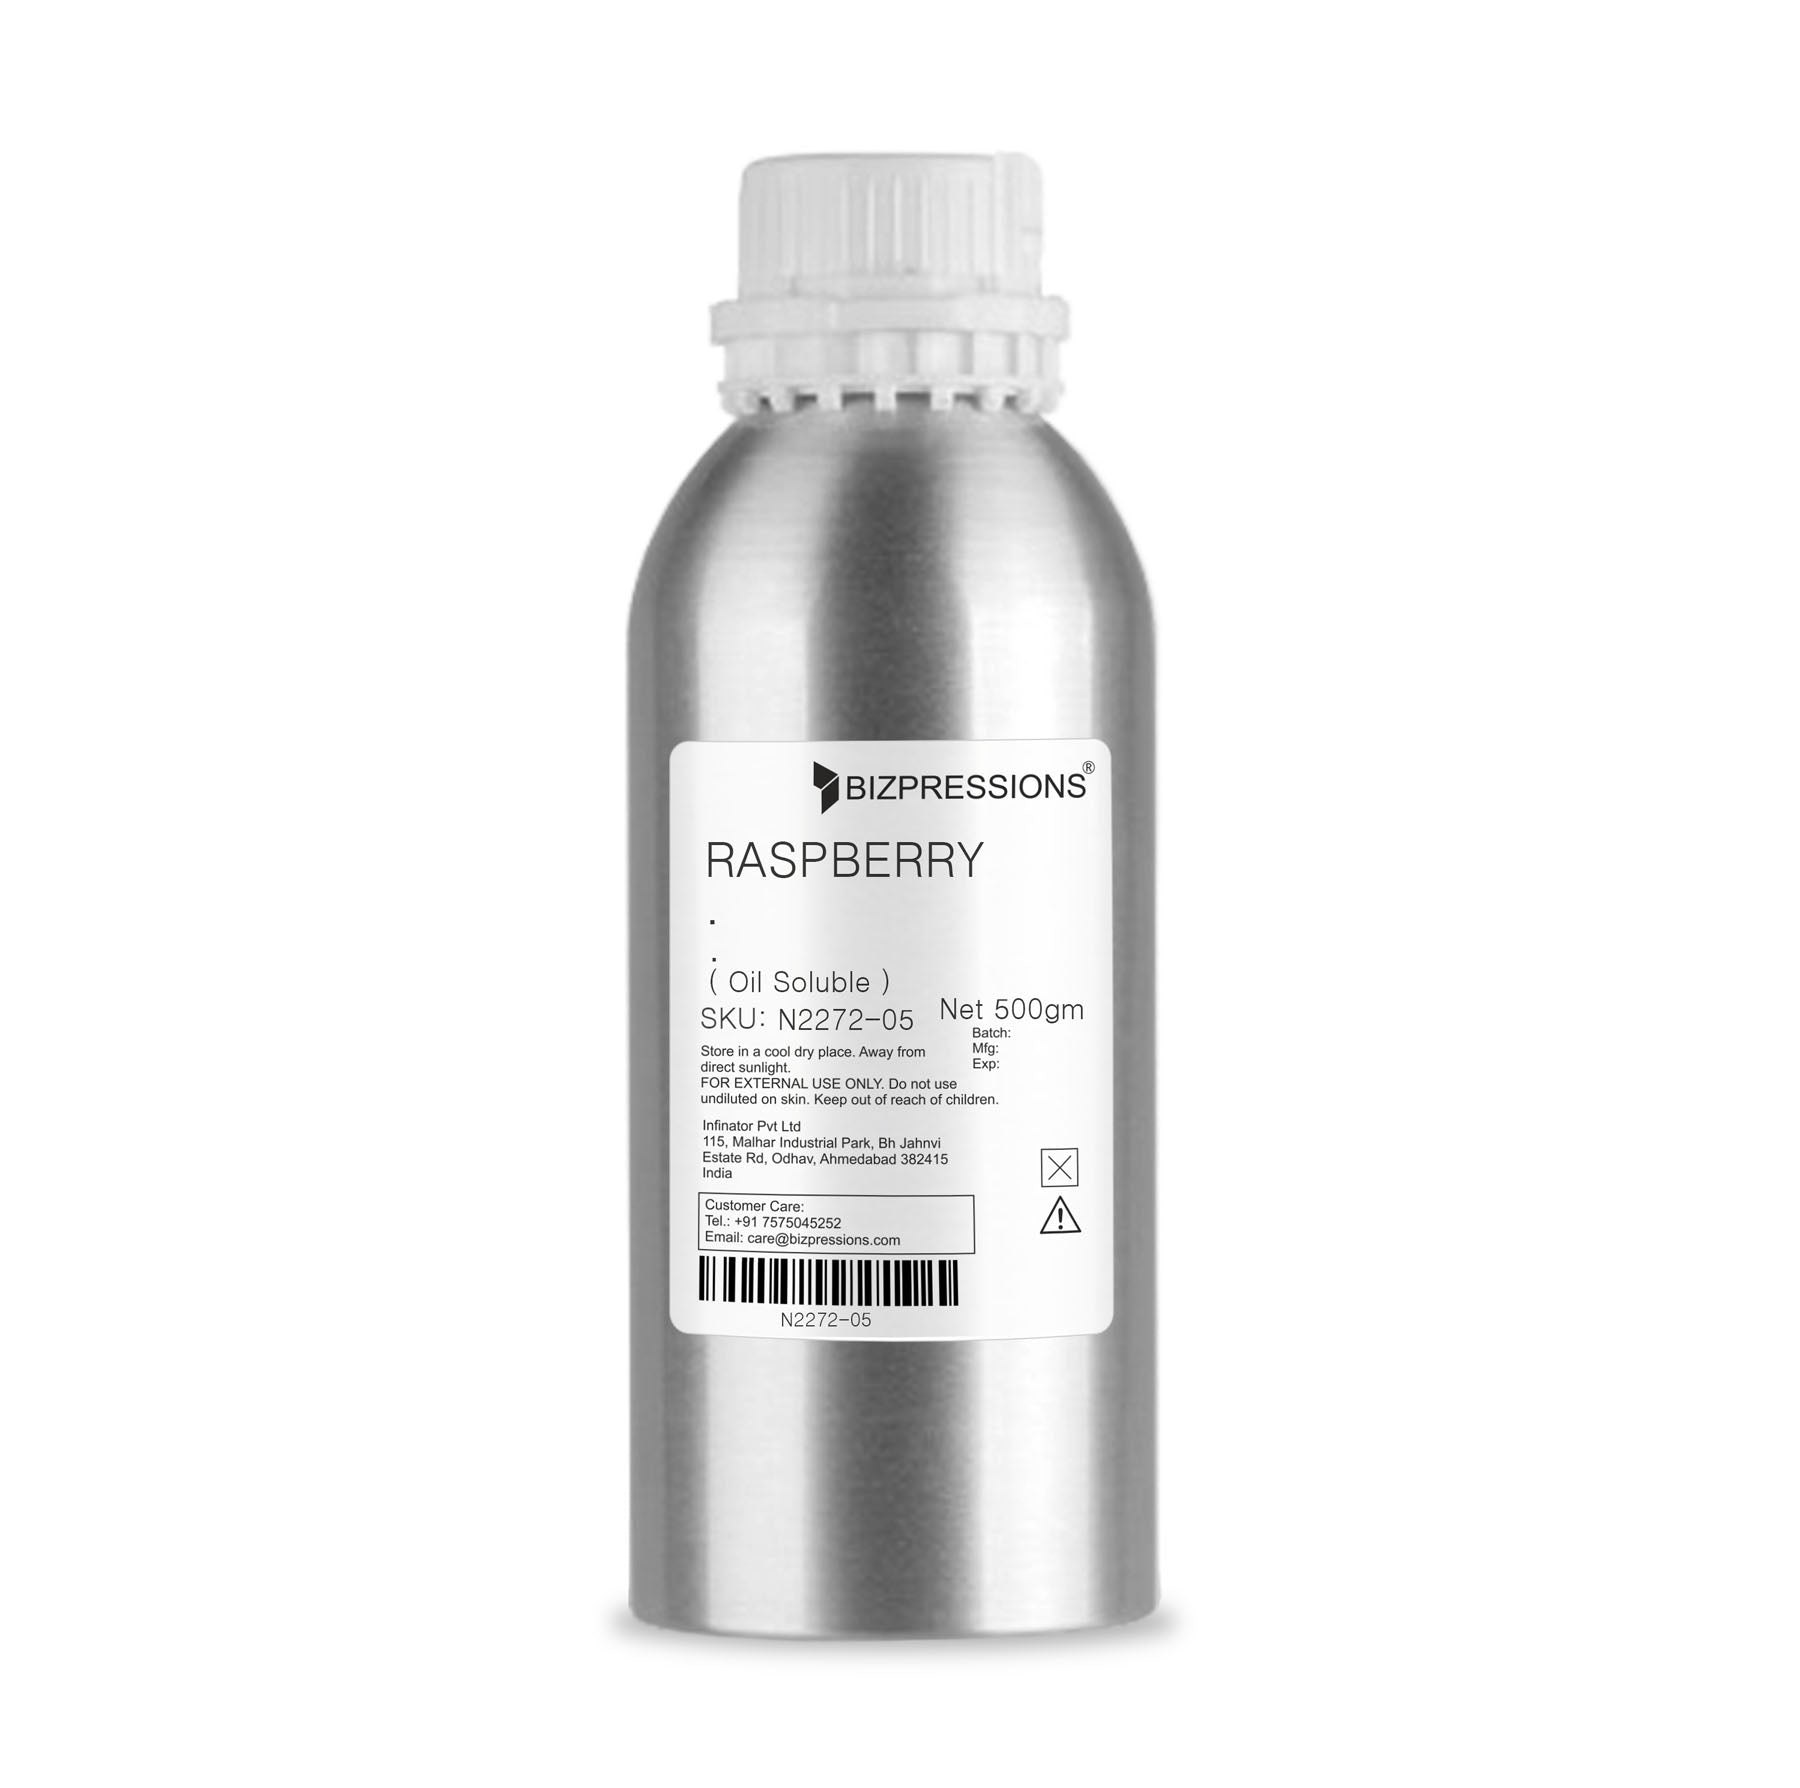 RASPBERRY - Fragrance ( Oil Soluble ) - 500 gm